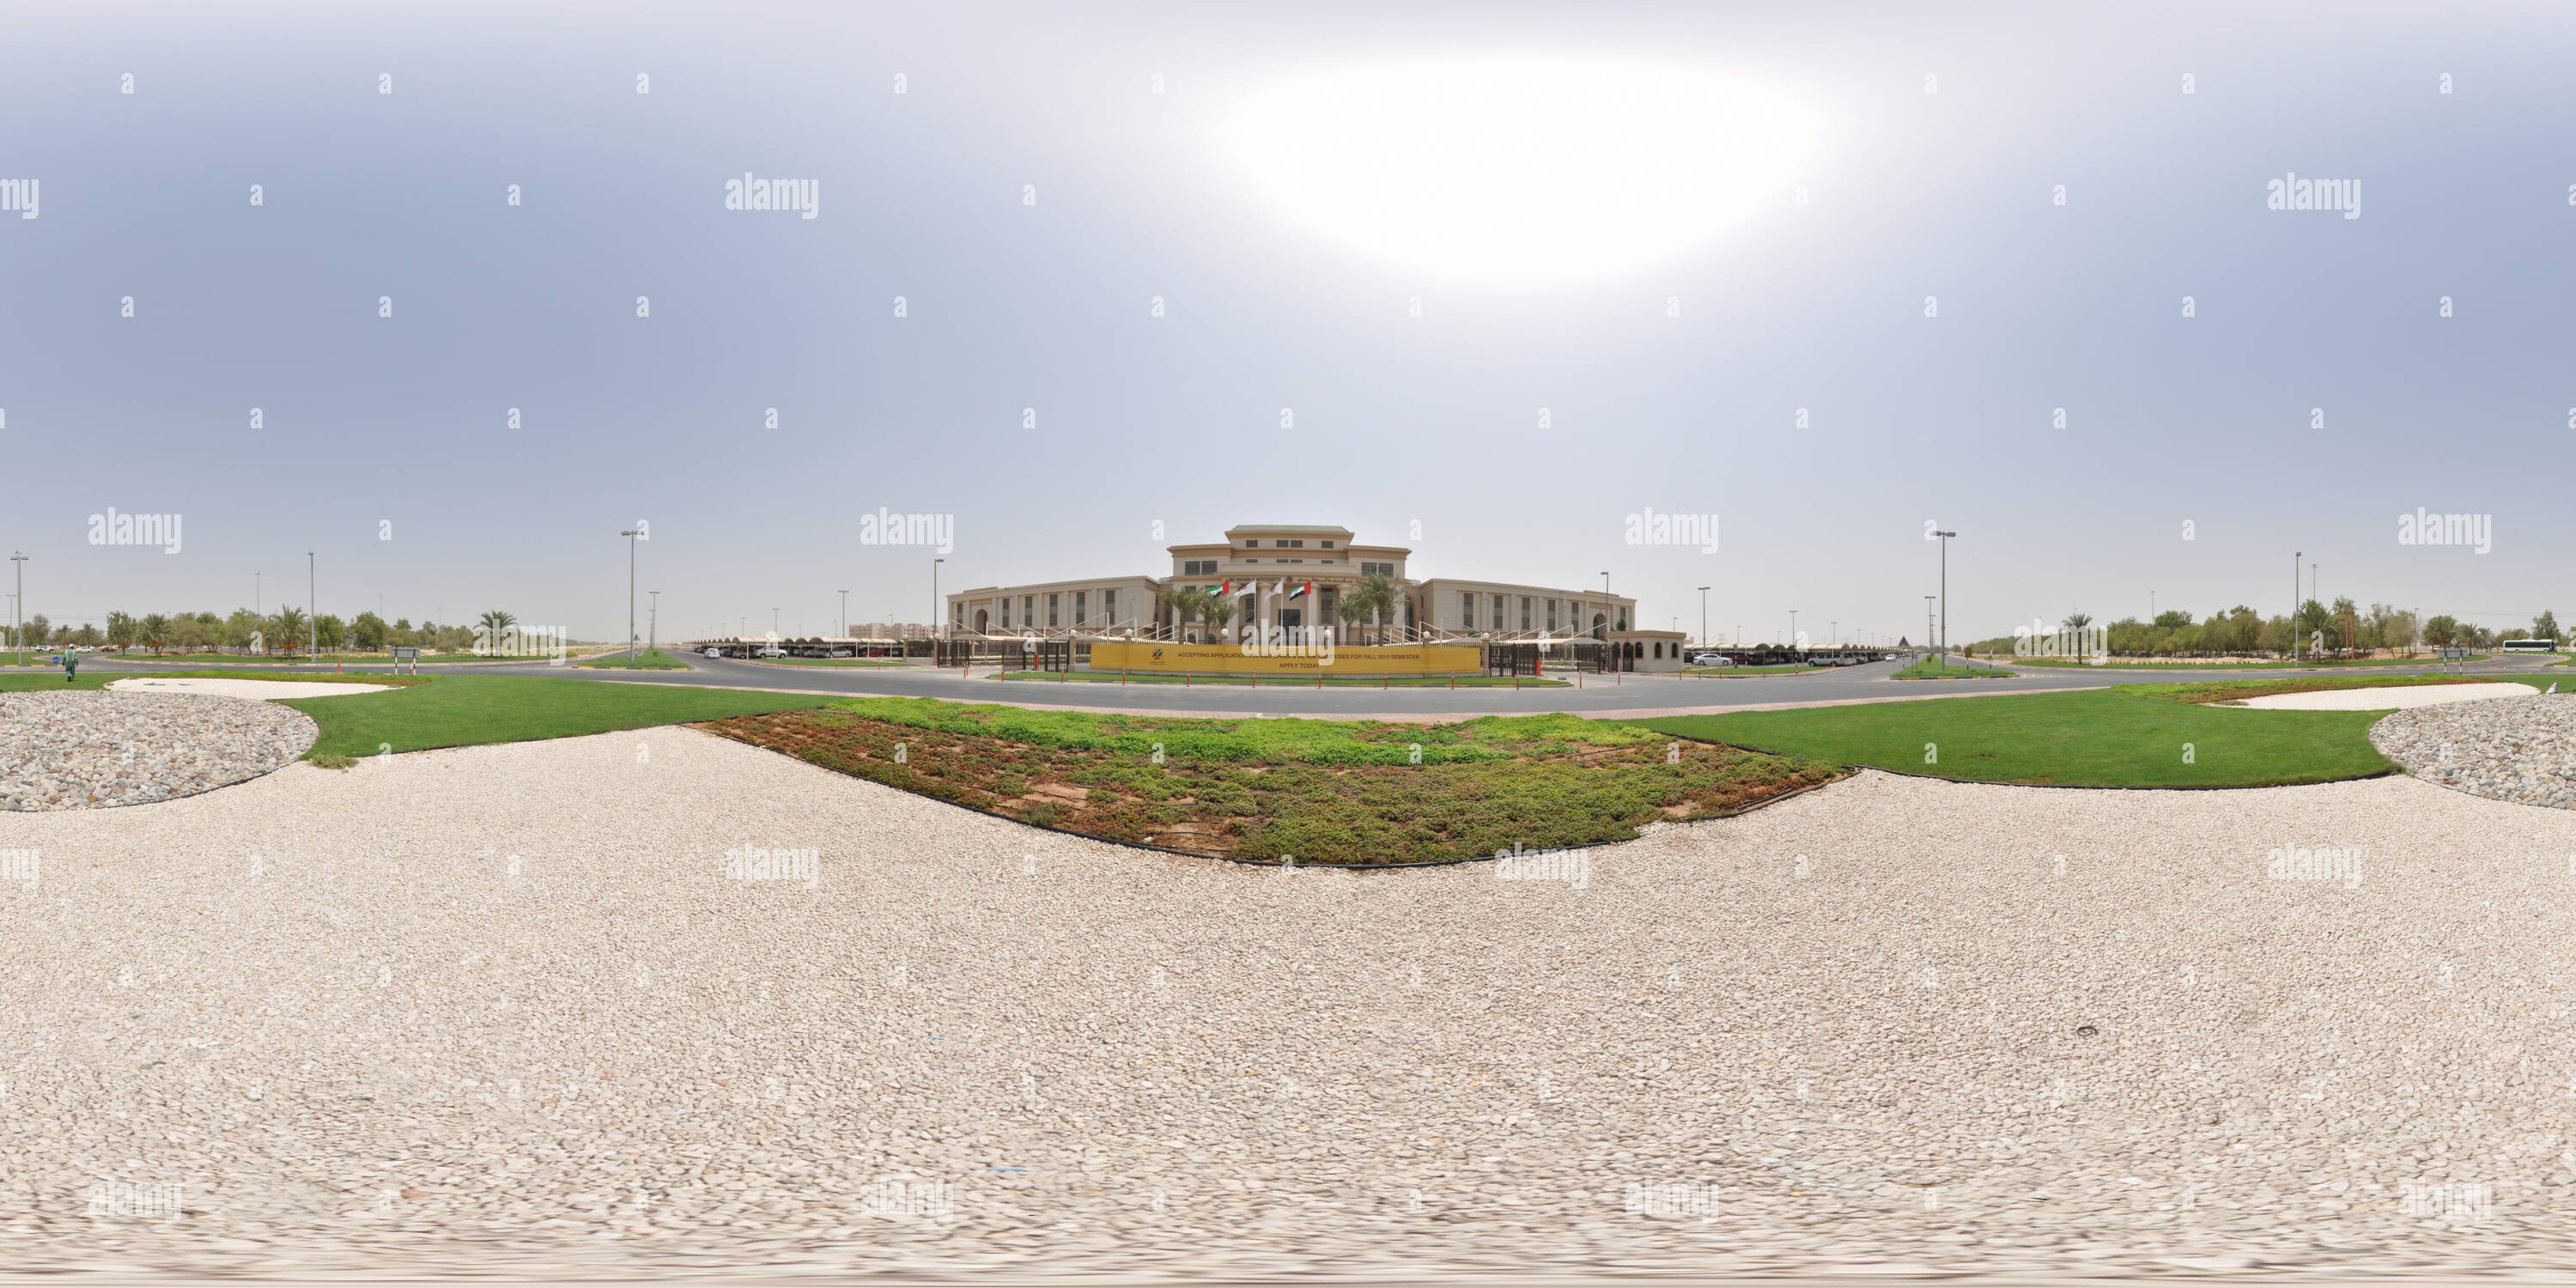 360 degree panoramic view of Abu Dhabi University ( ADU )